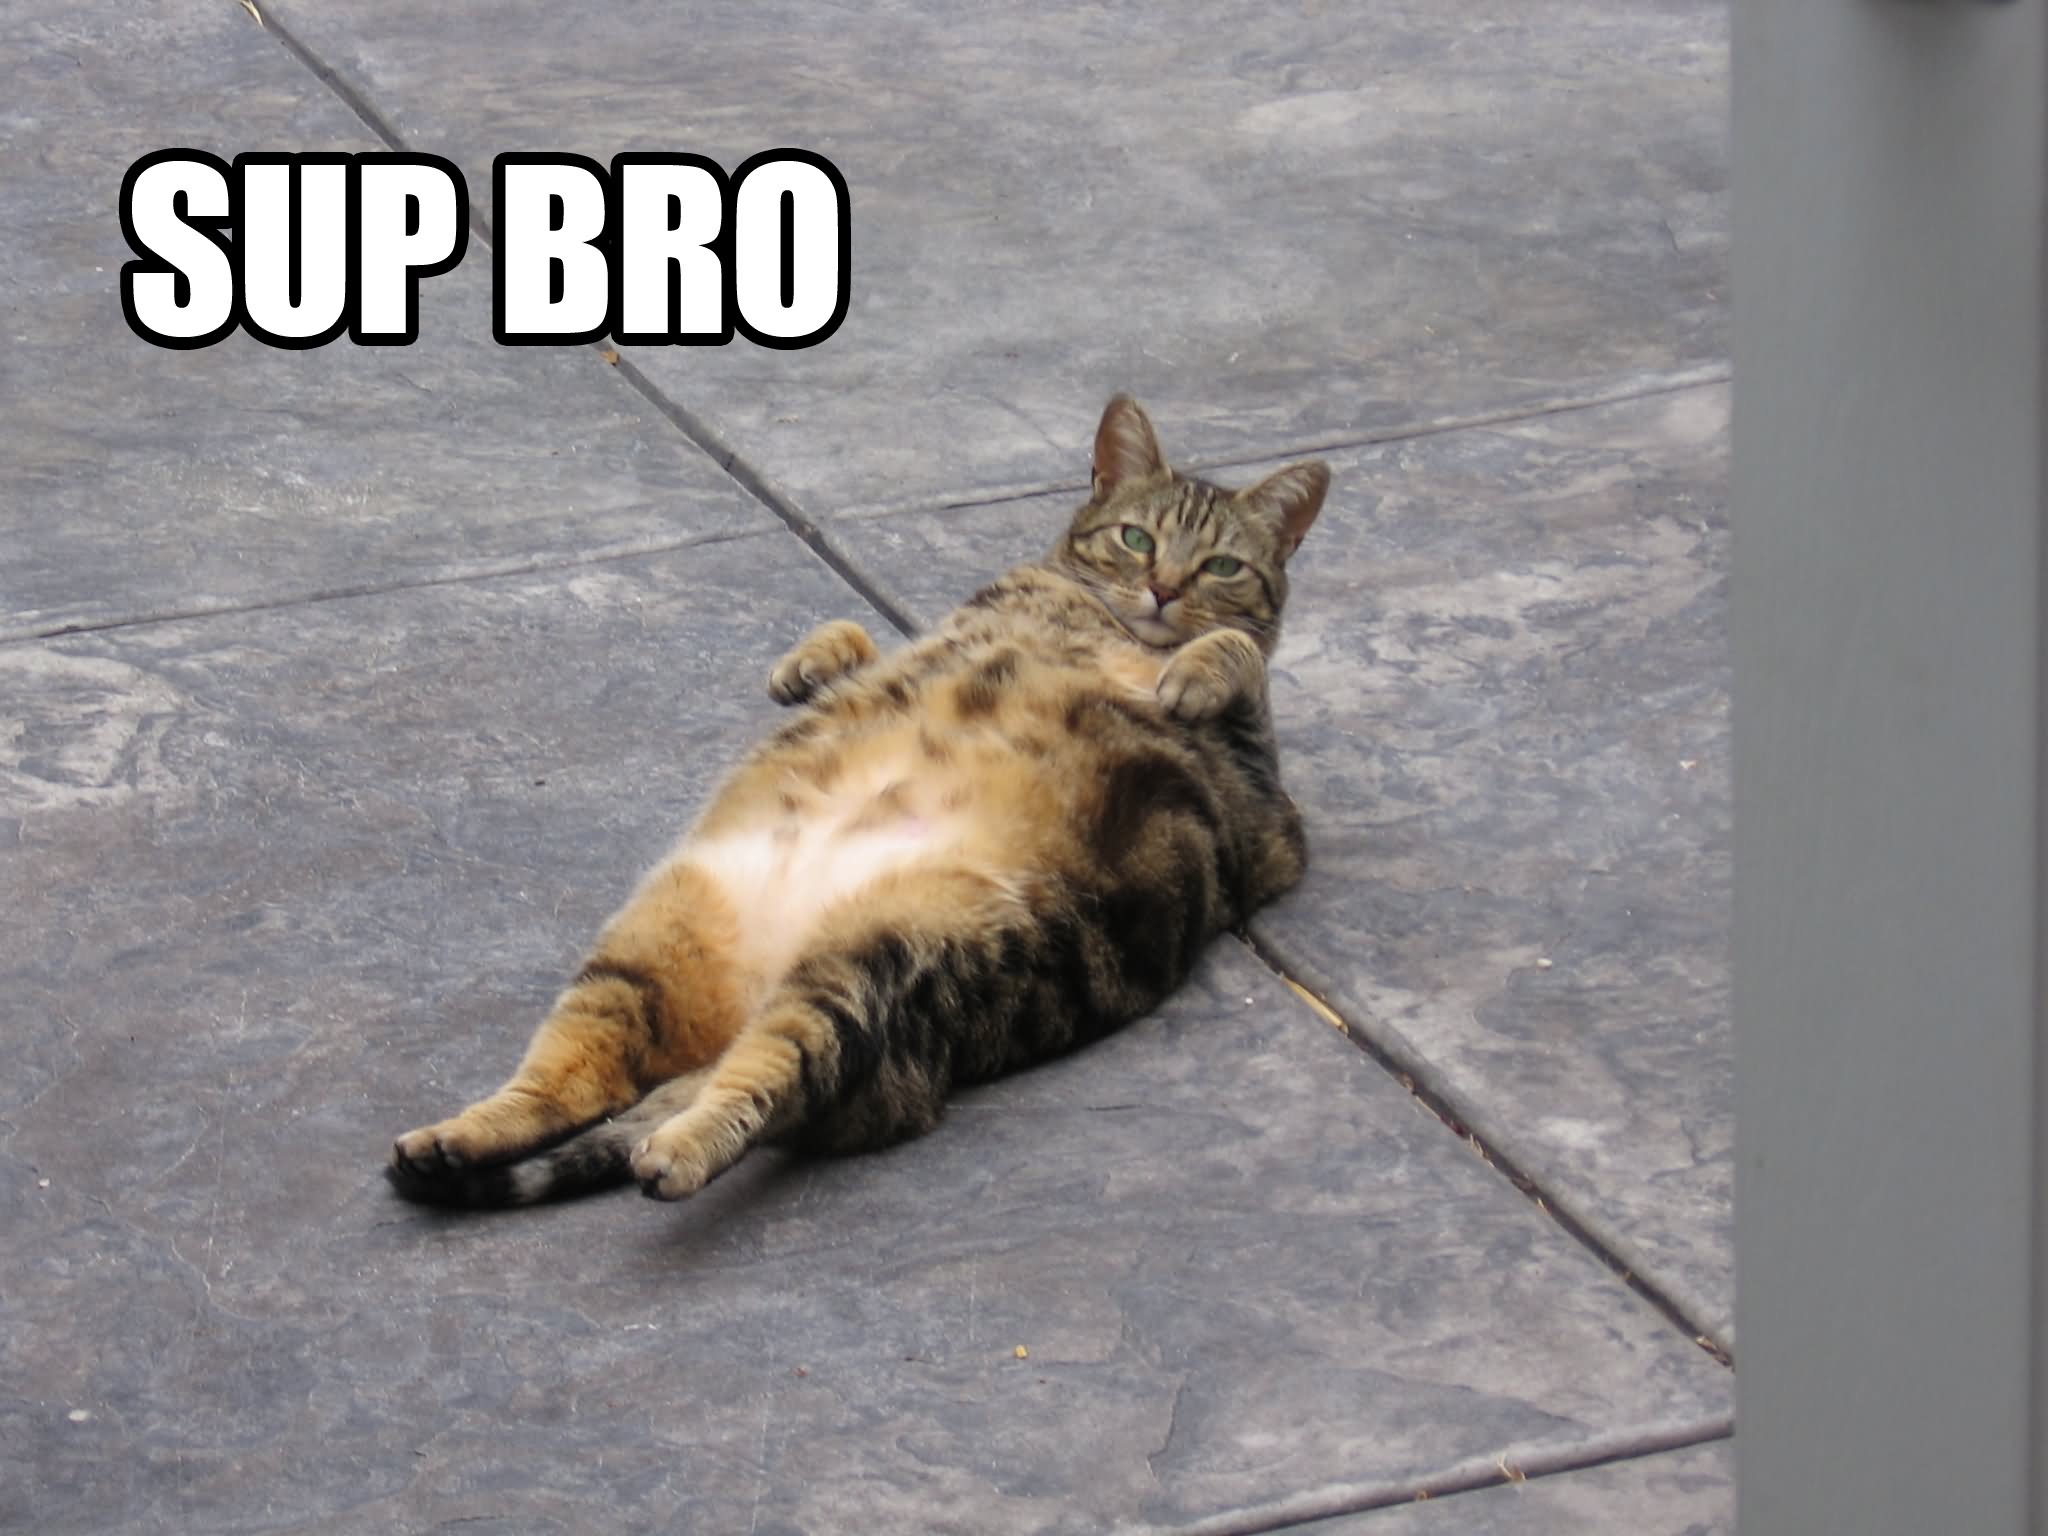 Sup Bro Funny Cat Image